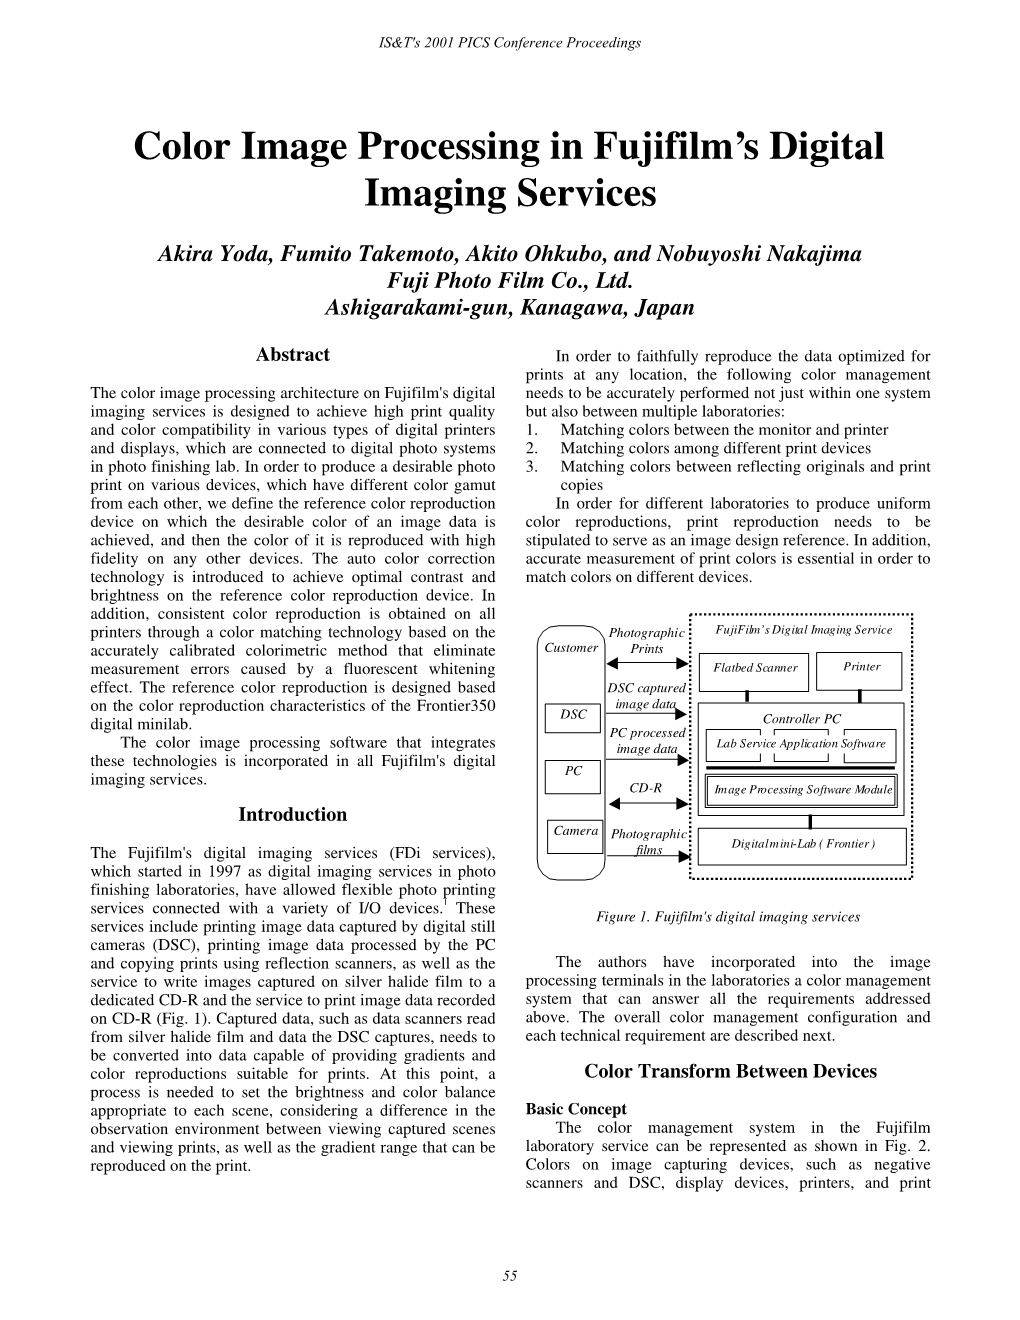 Color Image Processing in Fujifilm's Digital Imaging Services